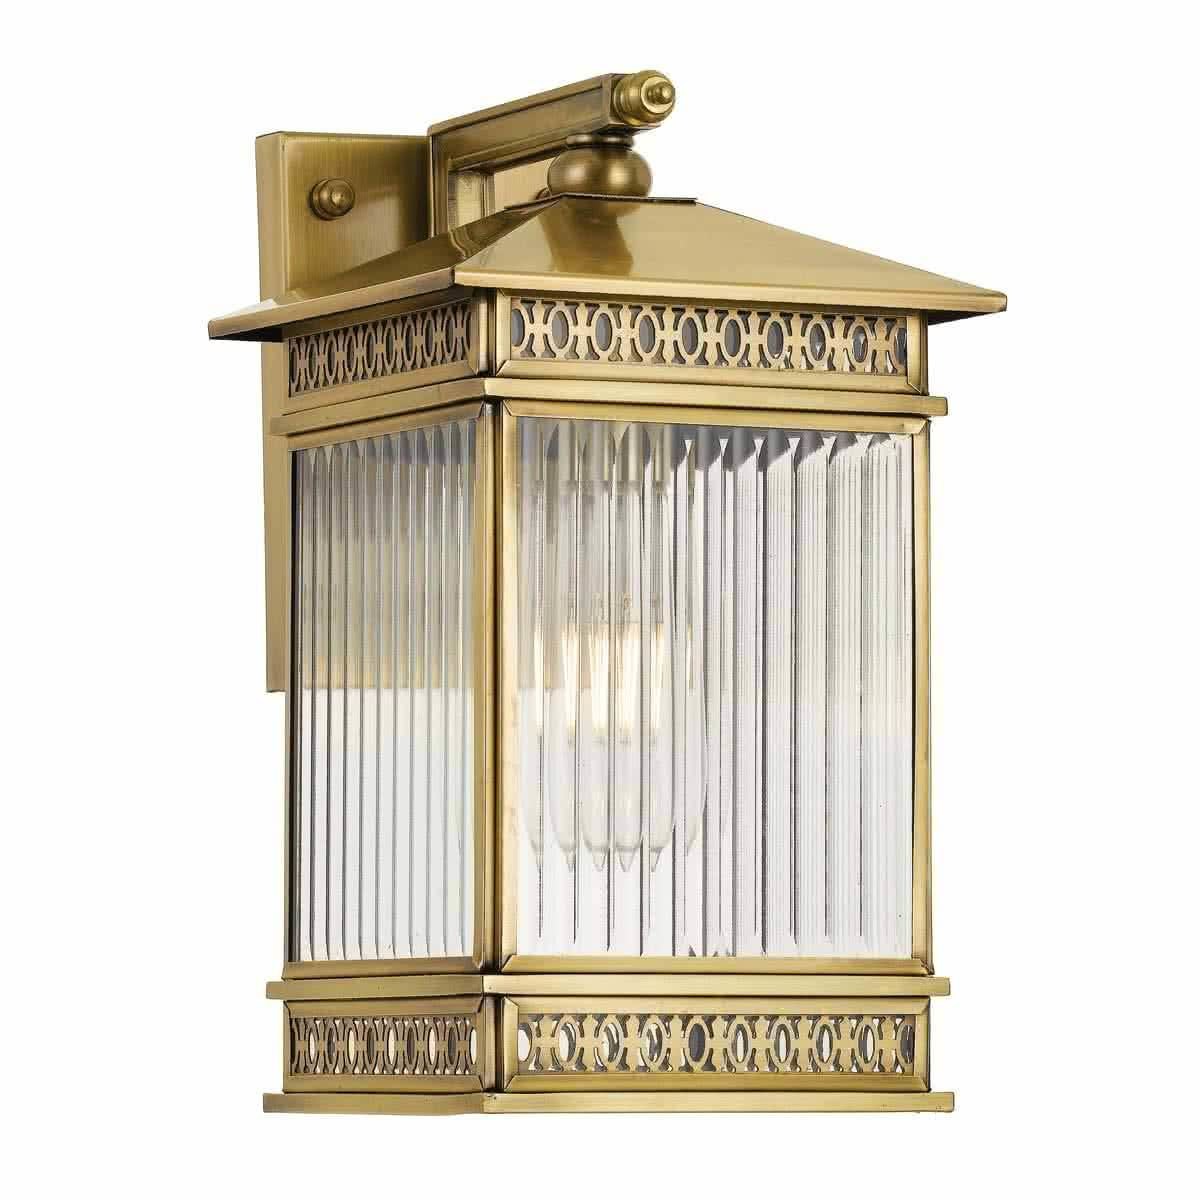 Avera Small Solid Brass Outdoor Coach Wall Light